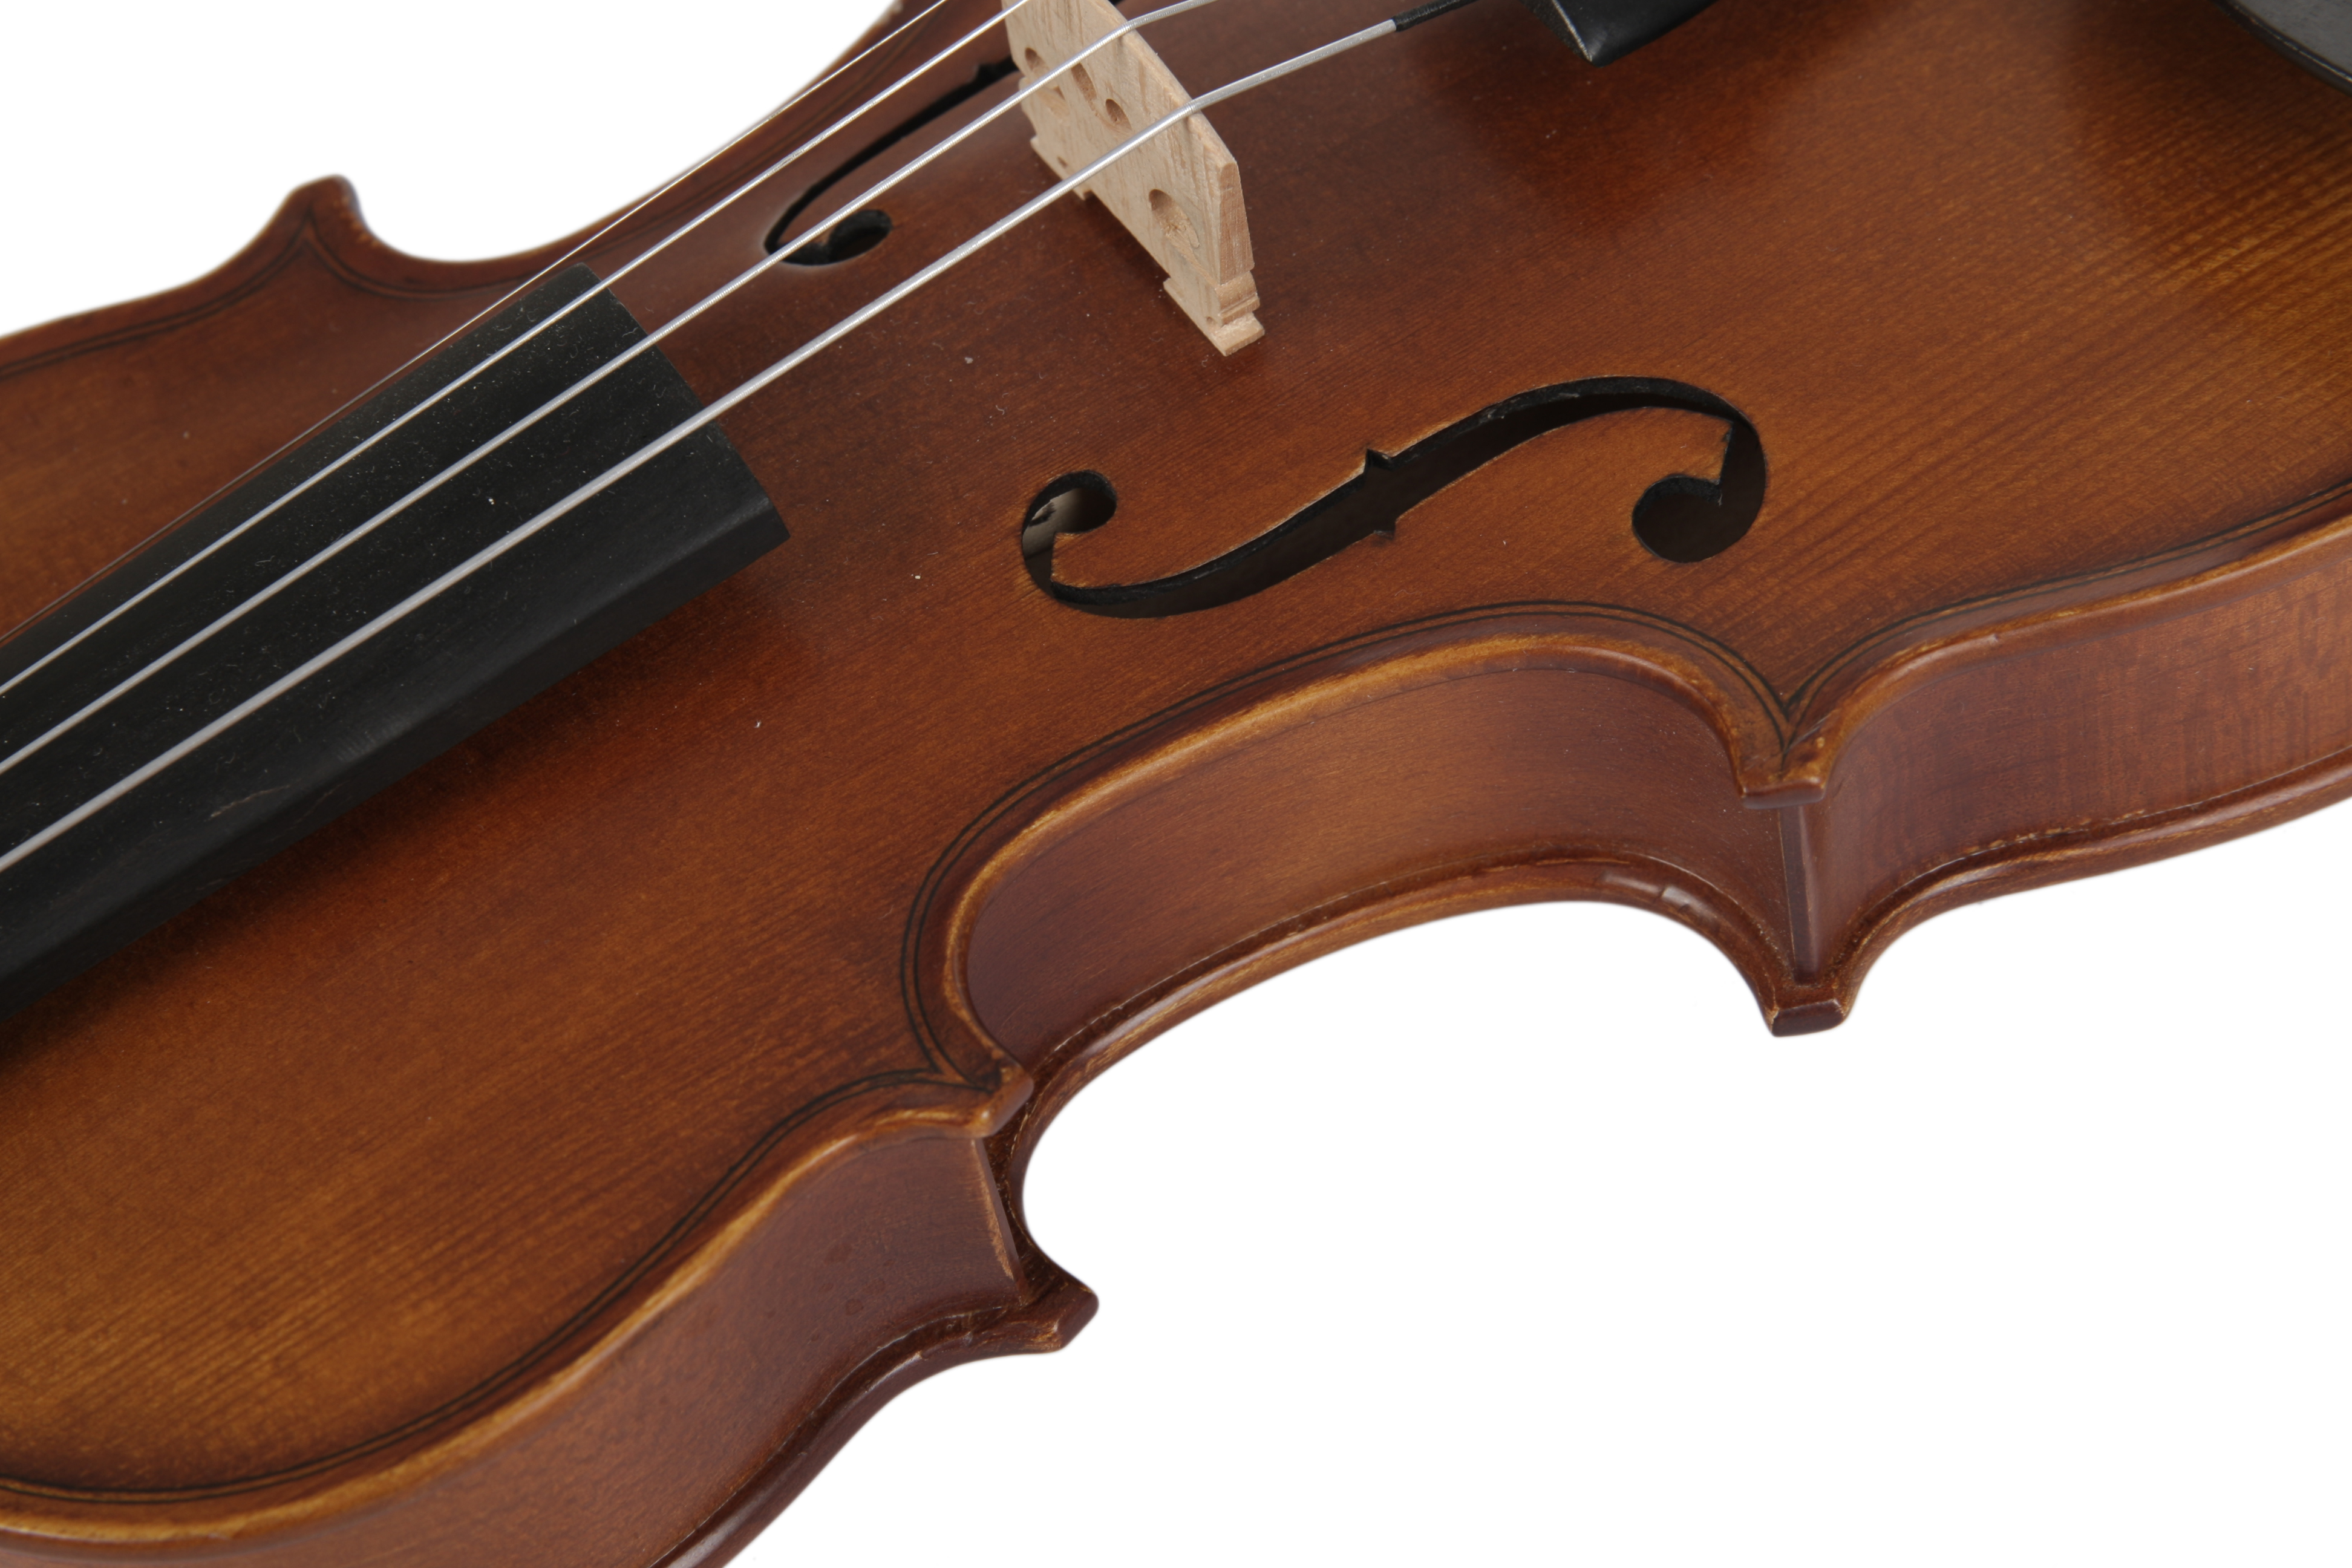 Violingarnitur Mod. 300 1/8